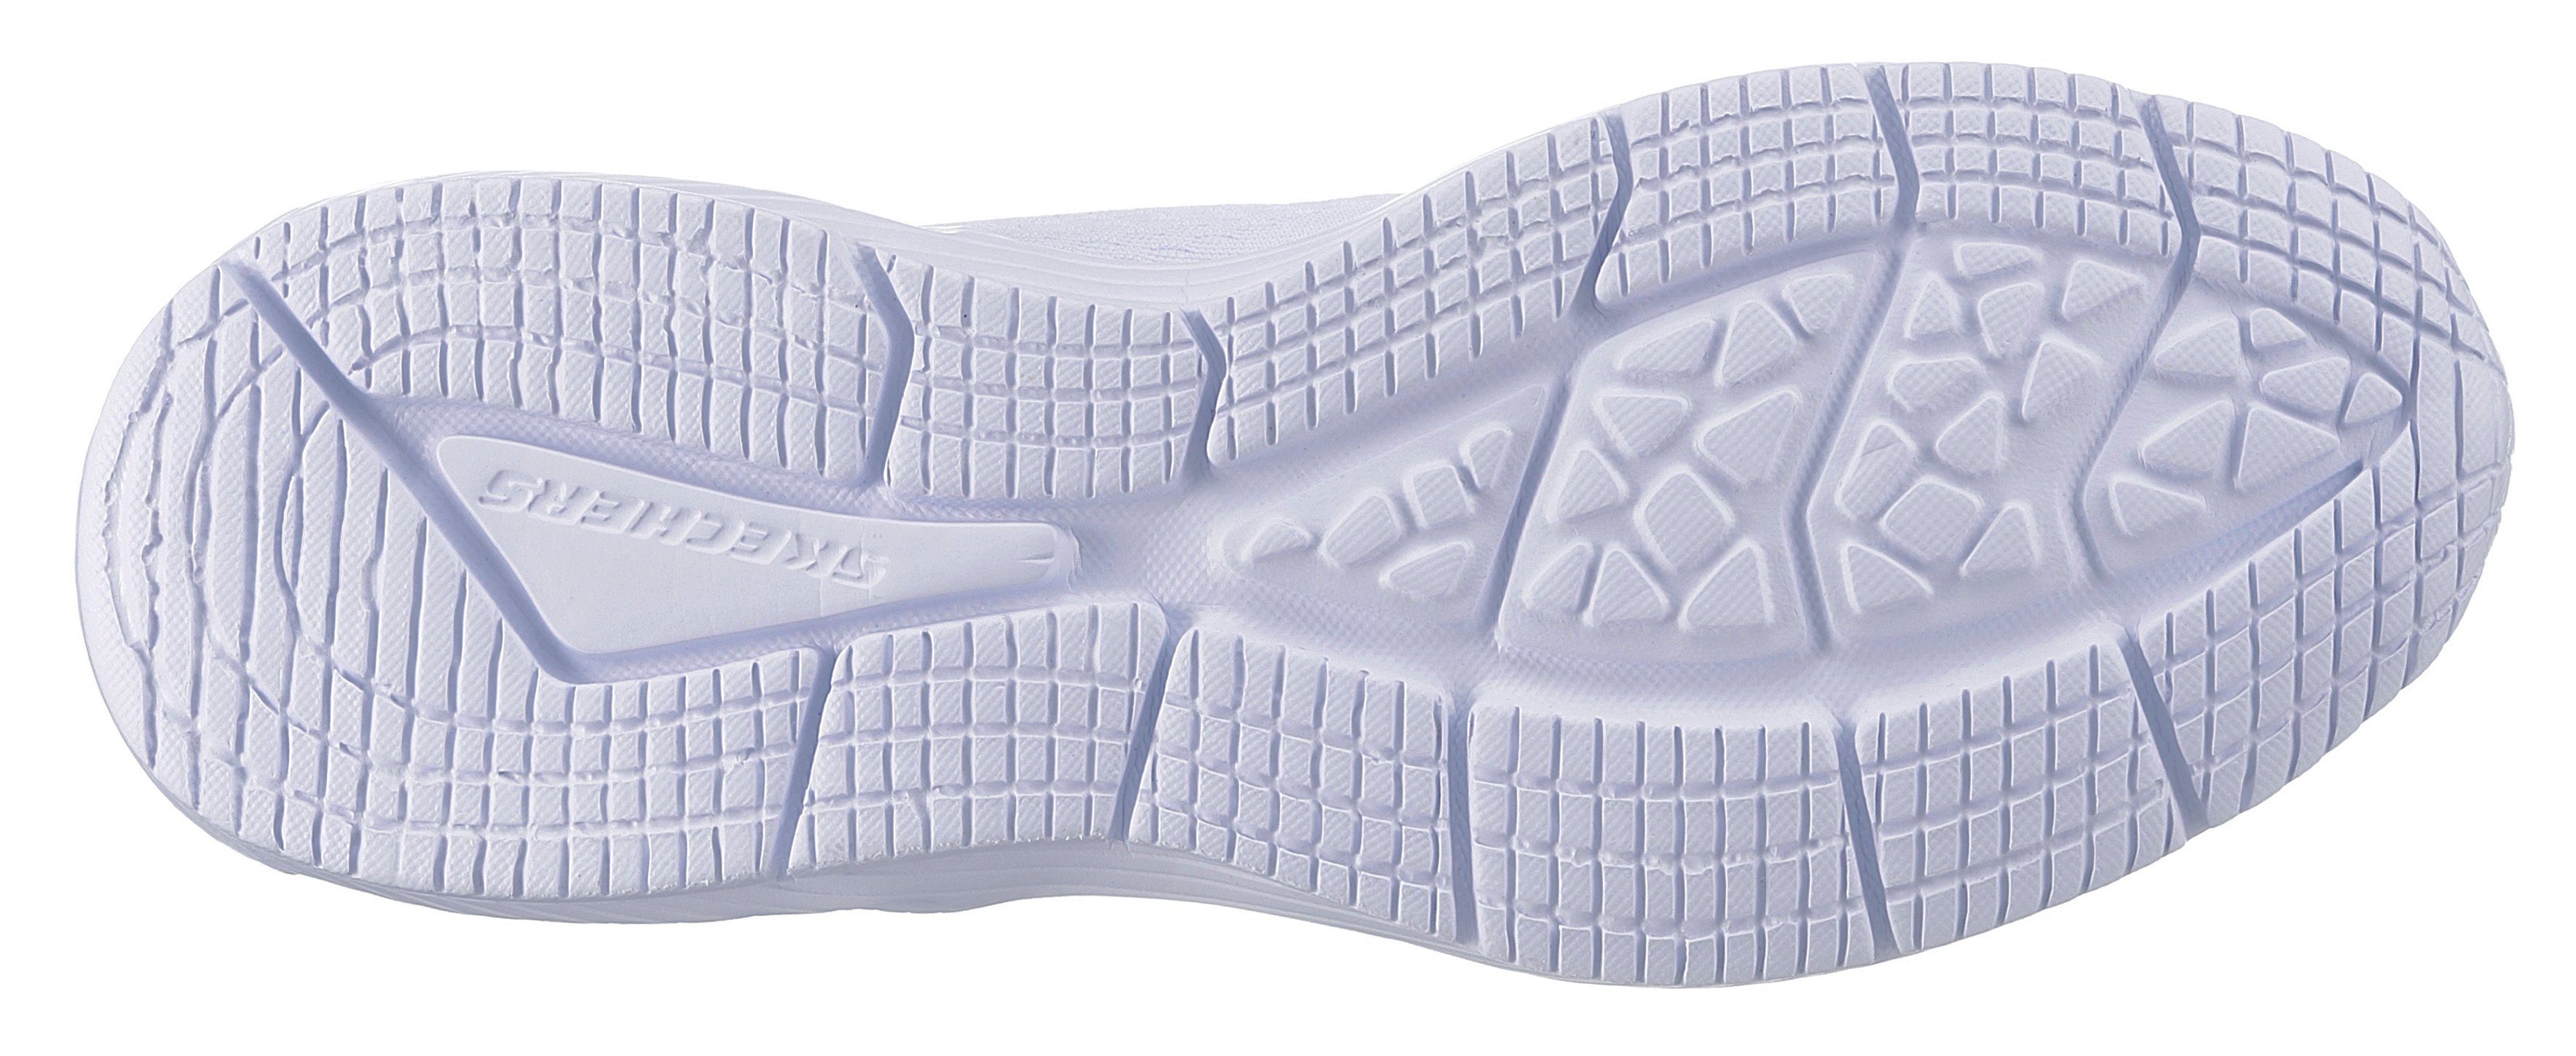 Skechers Dyna Air Sneaker Foam weiß Air-Cooled Memory mit